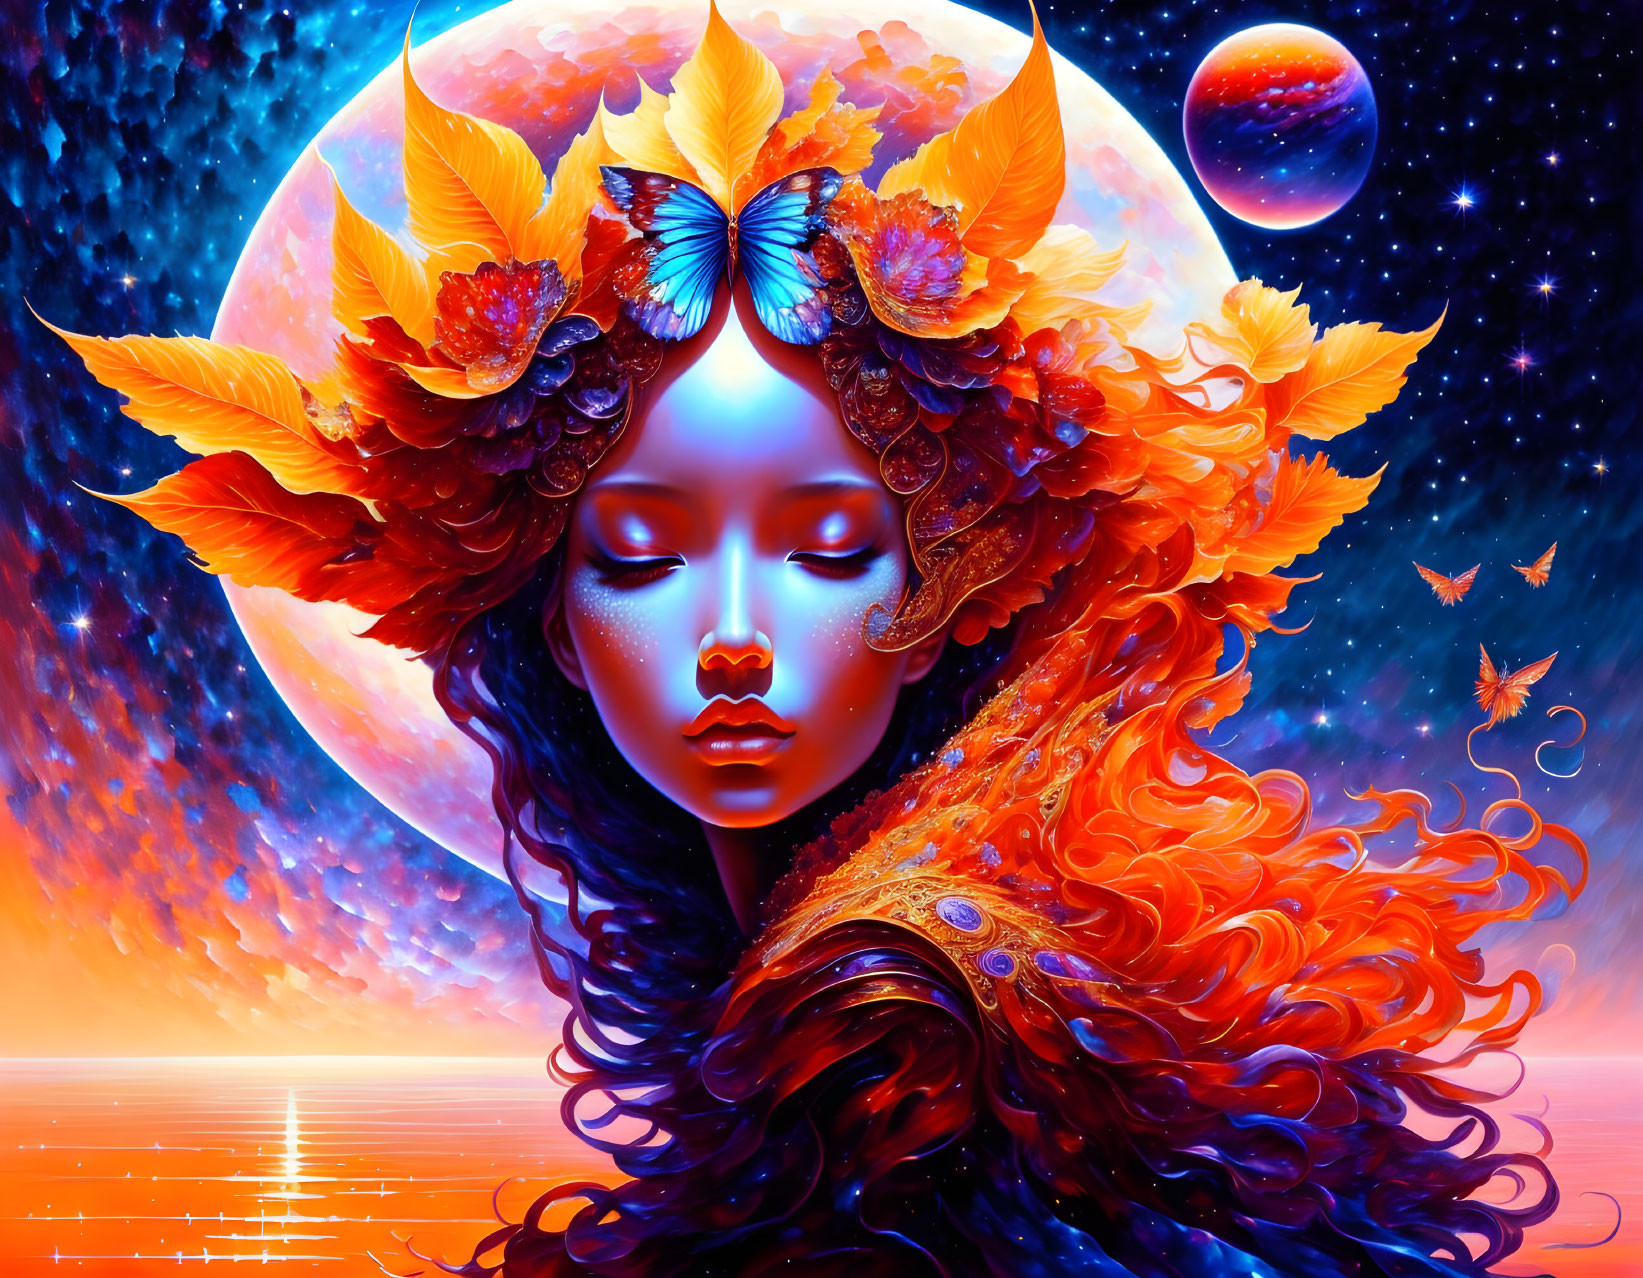 Colorful digital artwork: Woman with autumn leaf hair ornaments, fiery mane, celestial background.